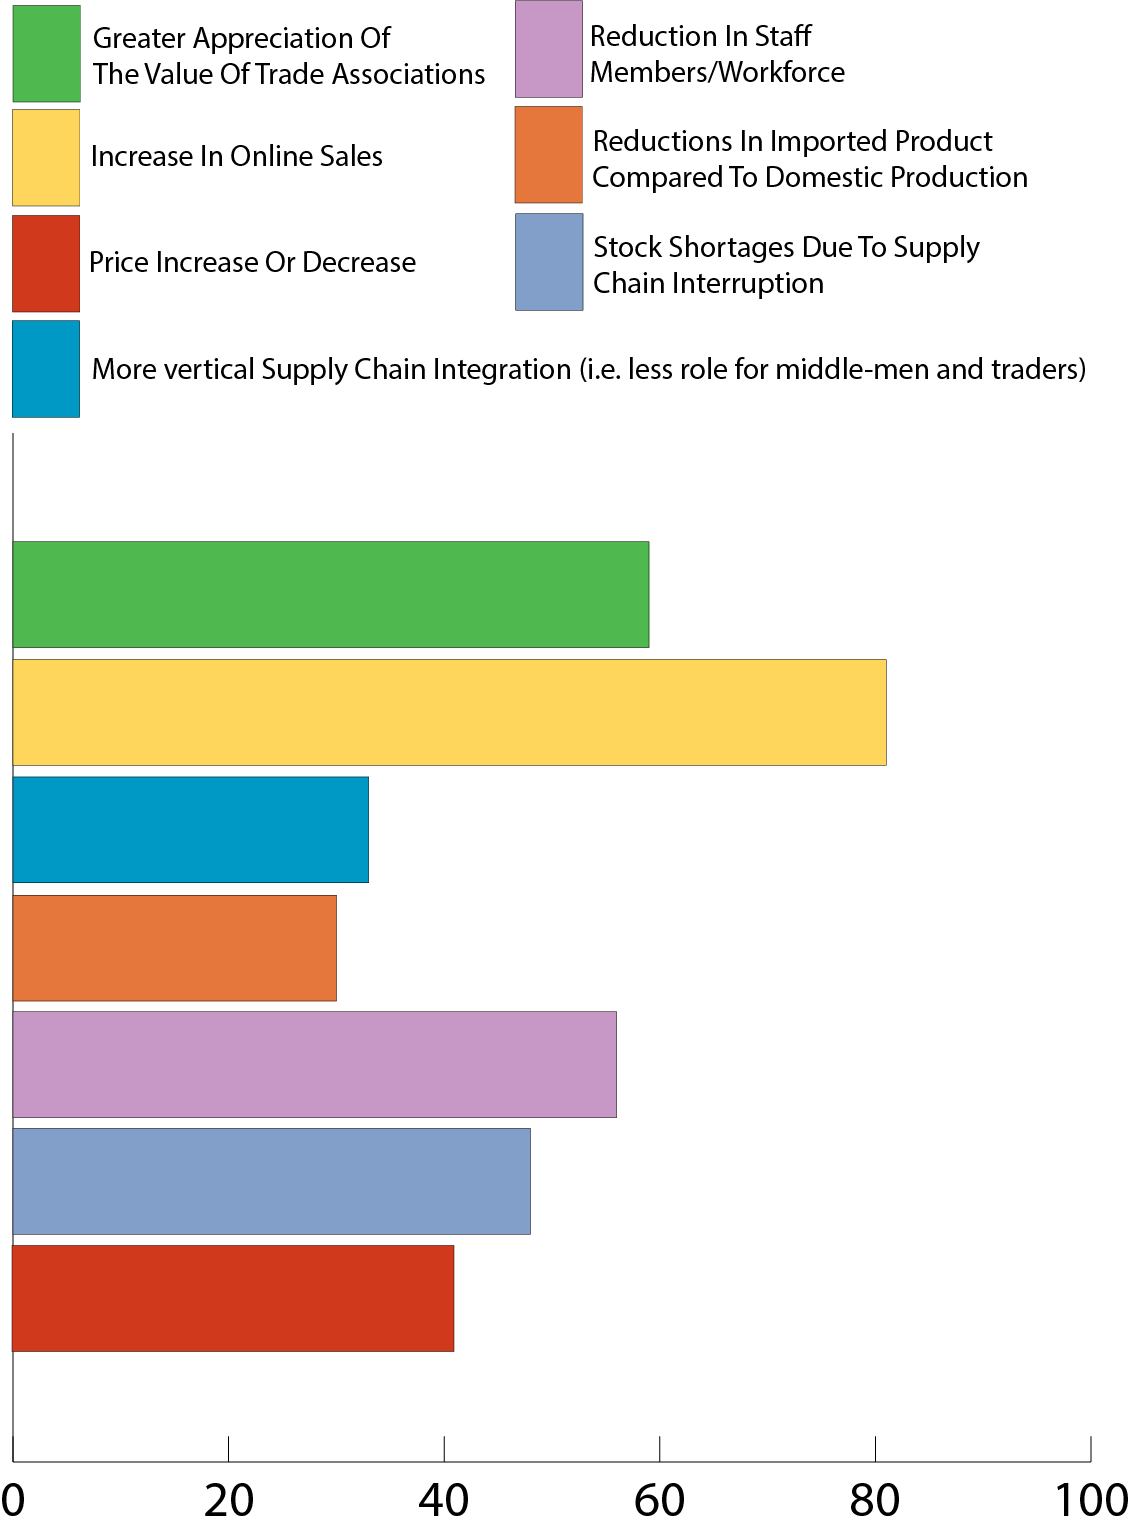 Image of survey statistics